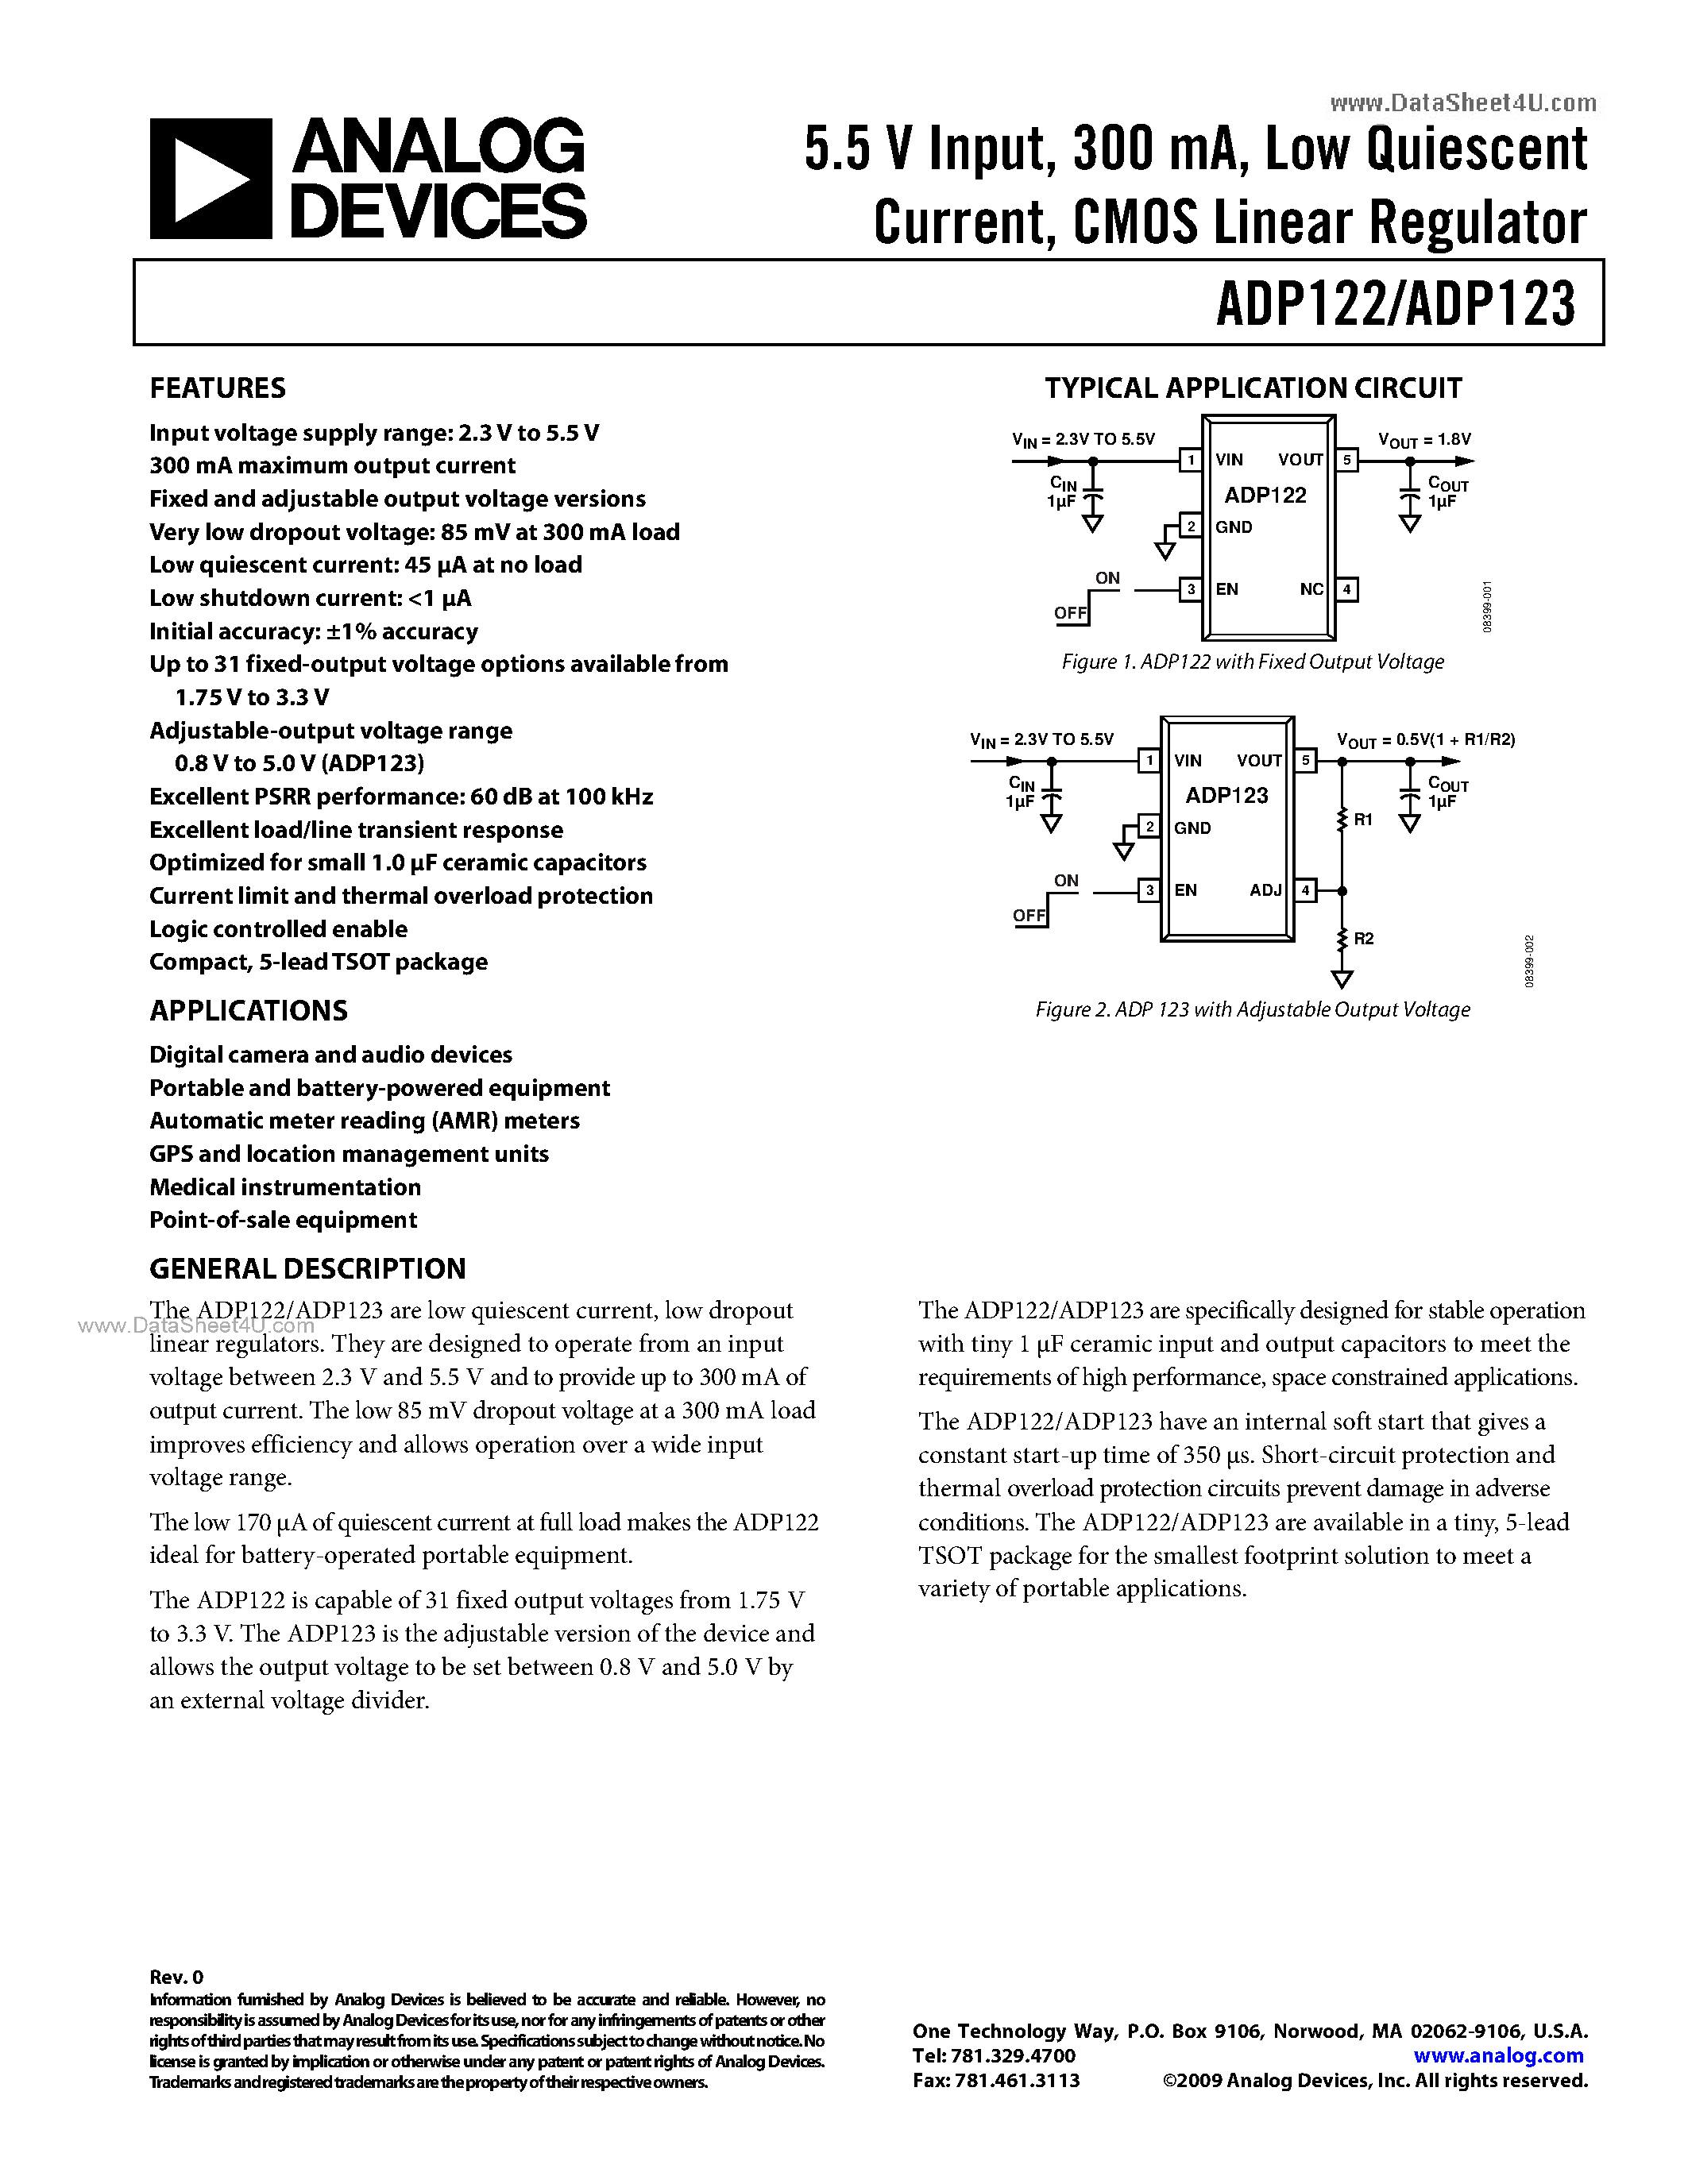 Даташит ADP122 - (ADP122 / ADP123) CMOS Linear Regulator страница 1